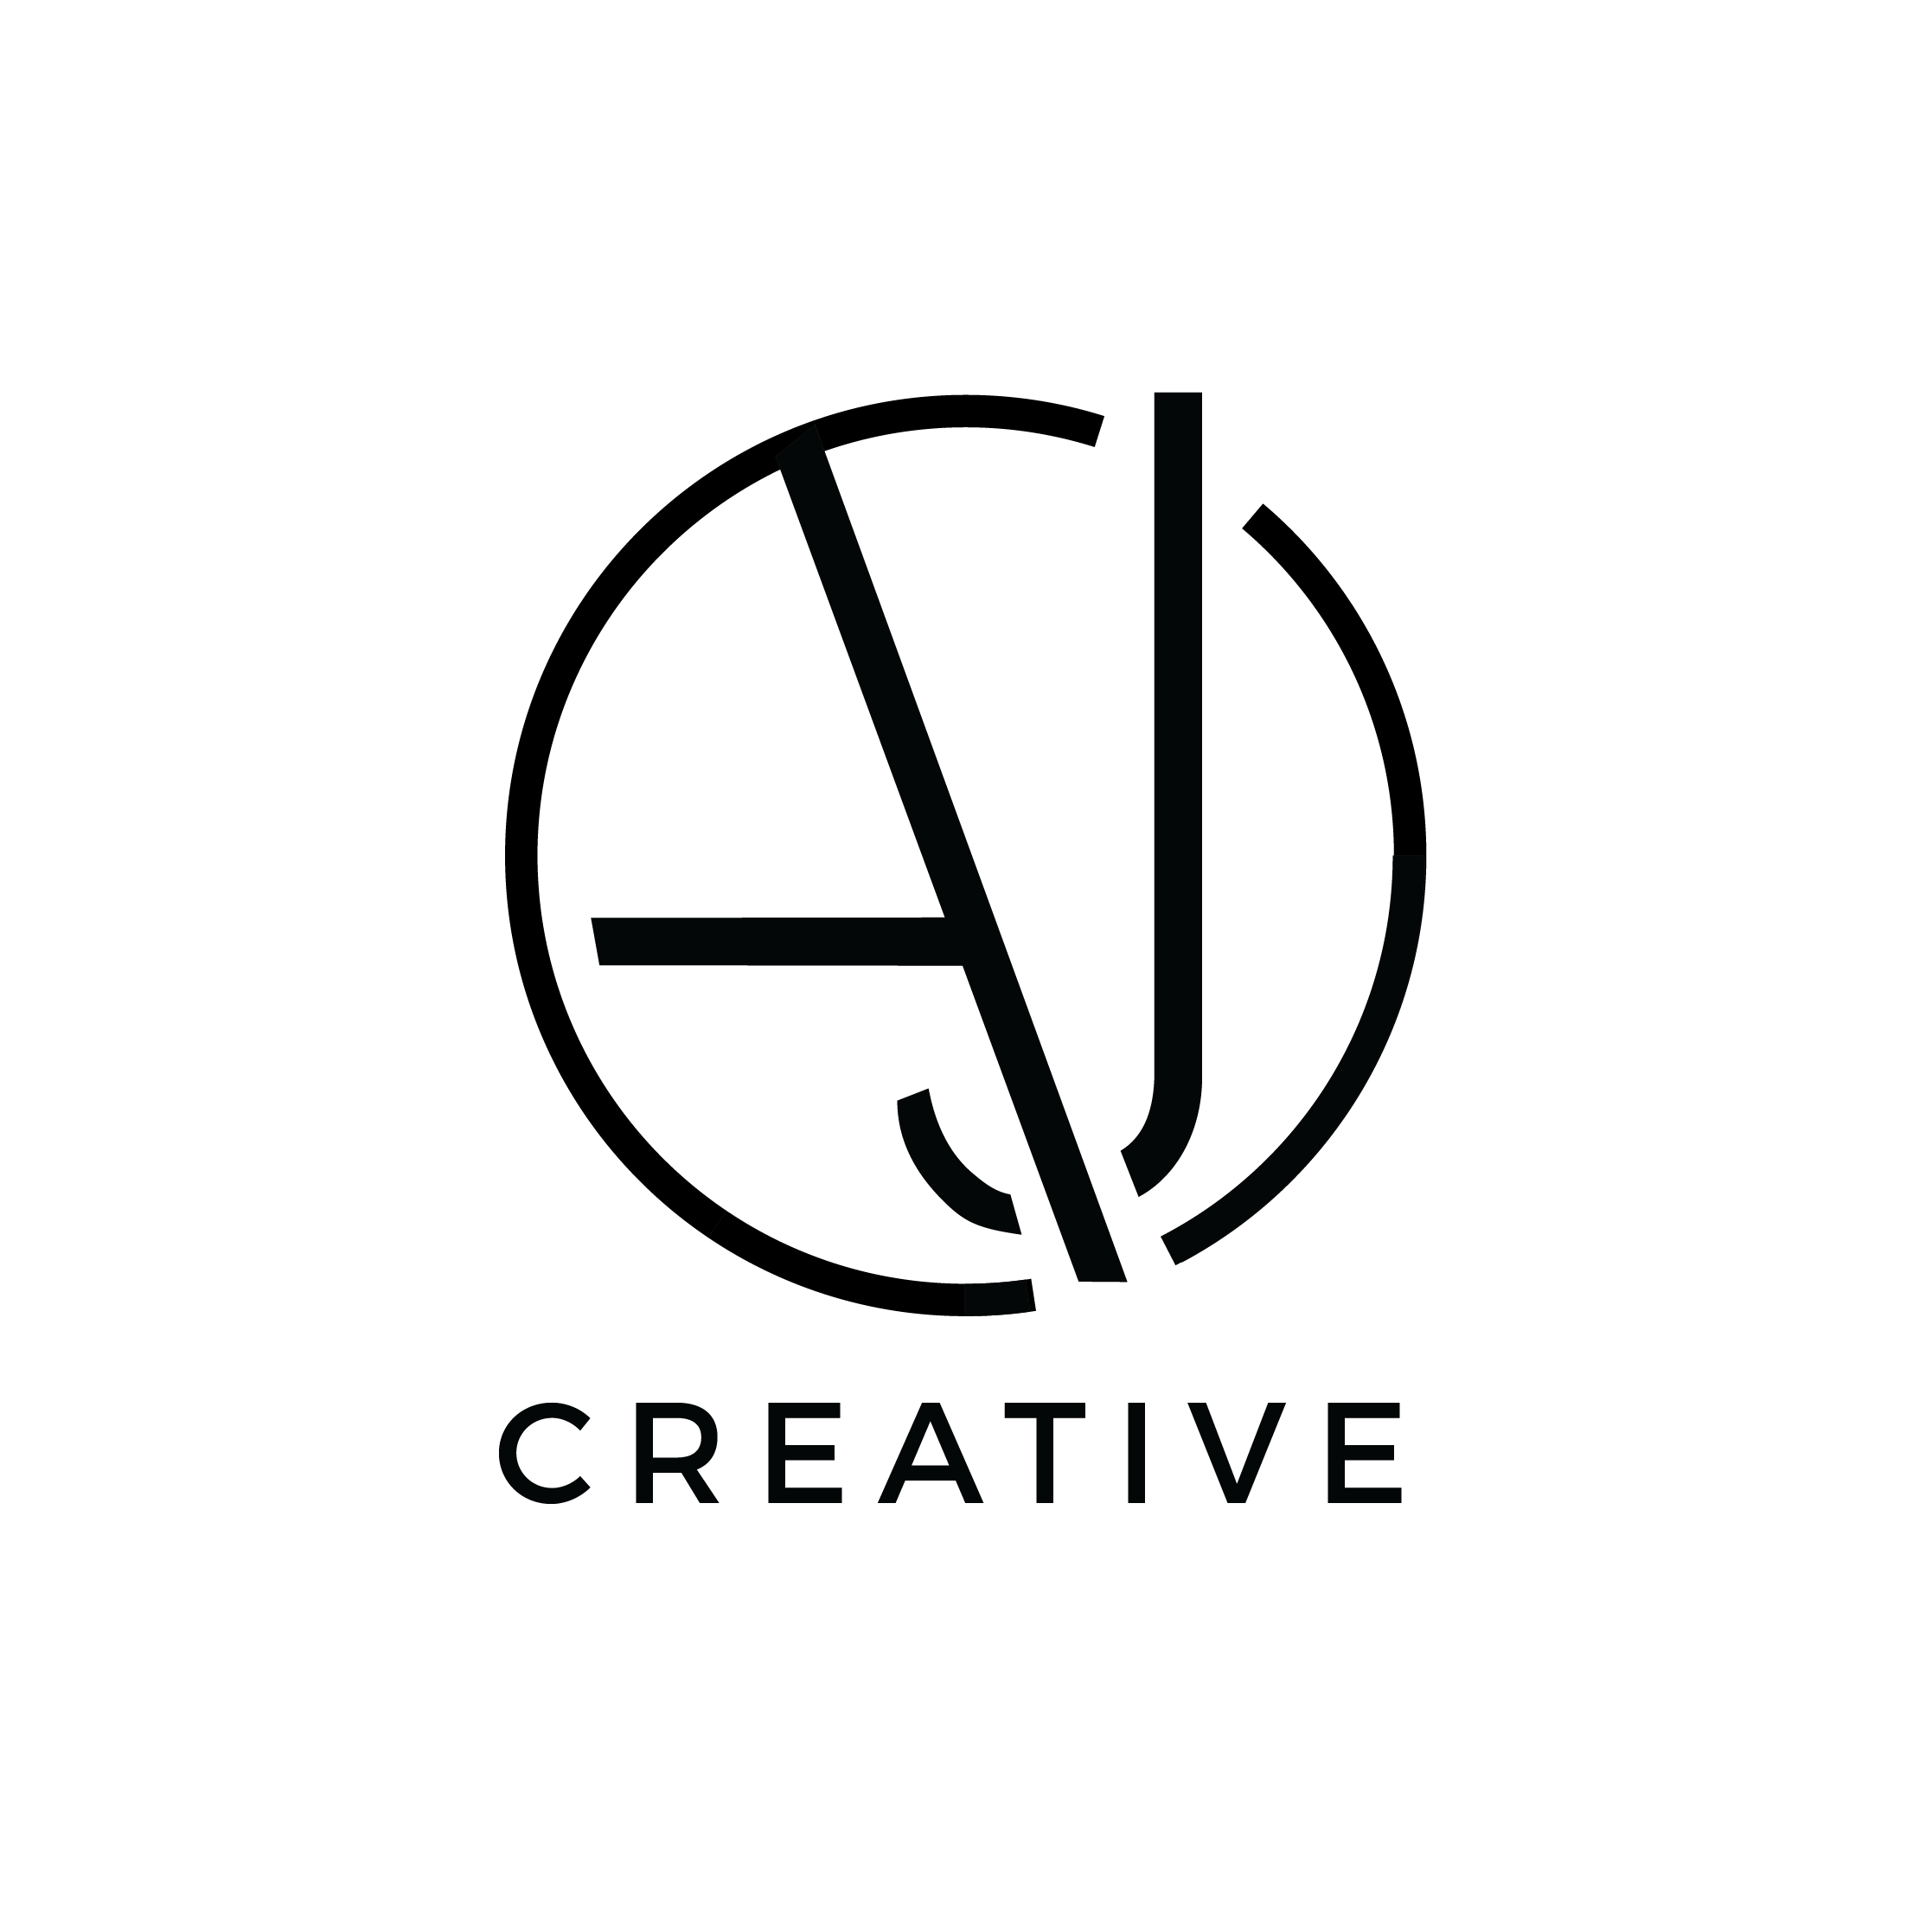 AJ Logo - AJ Creative Logo 5 - Lily Liseno